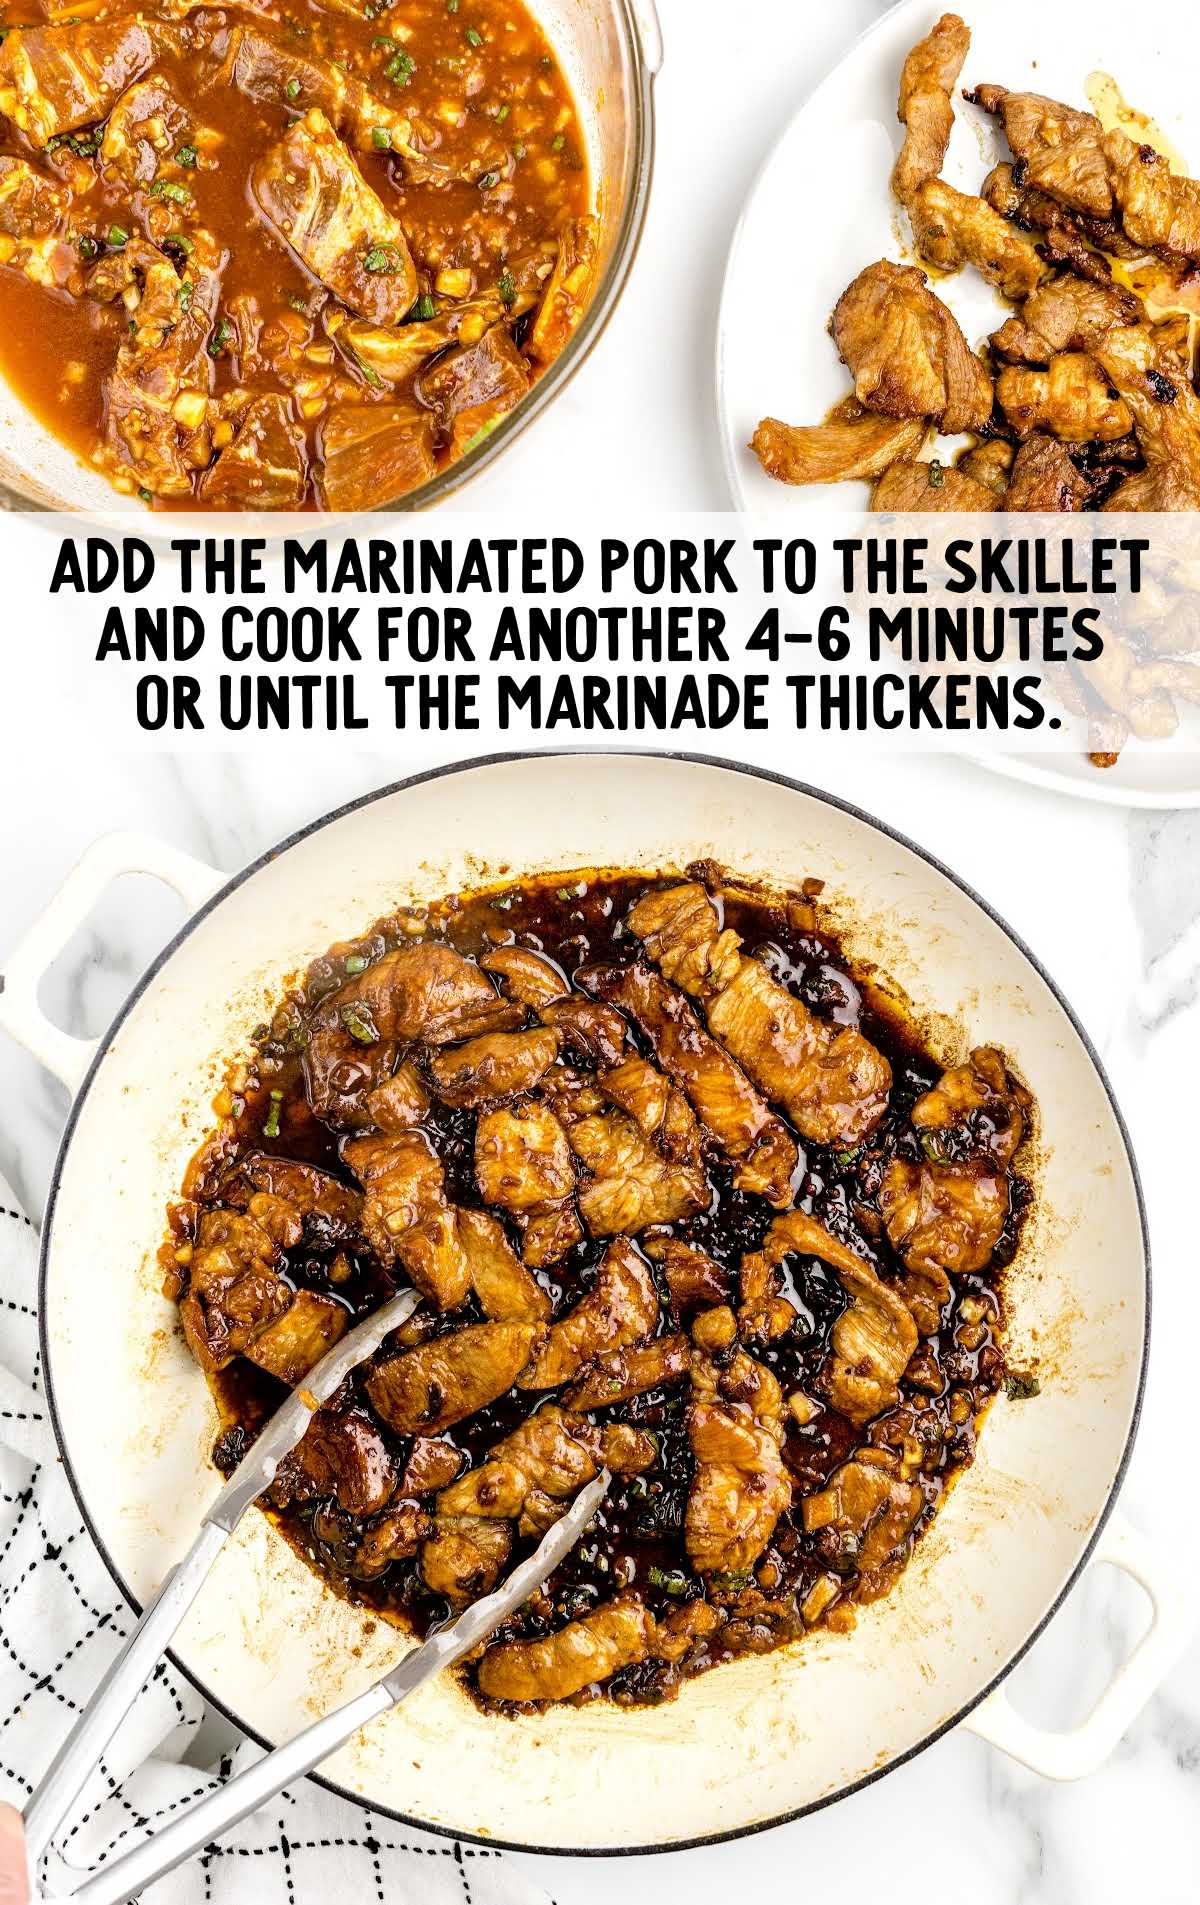 marinade the pork on the skillet